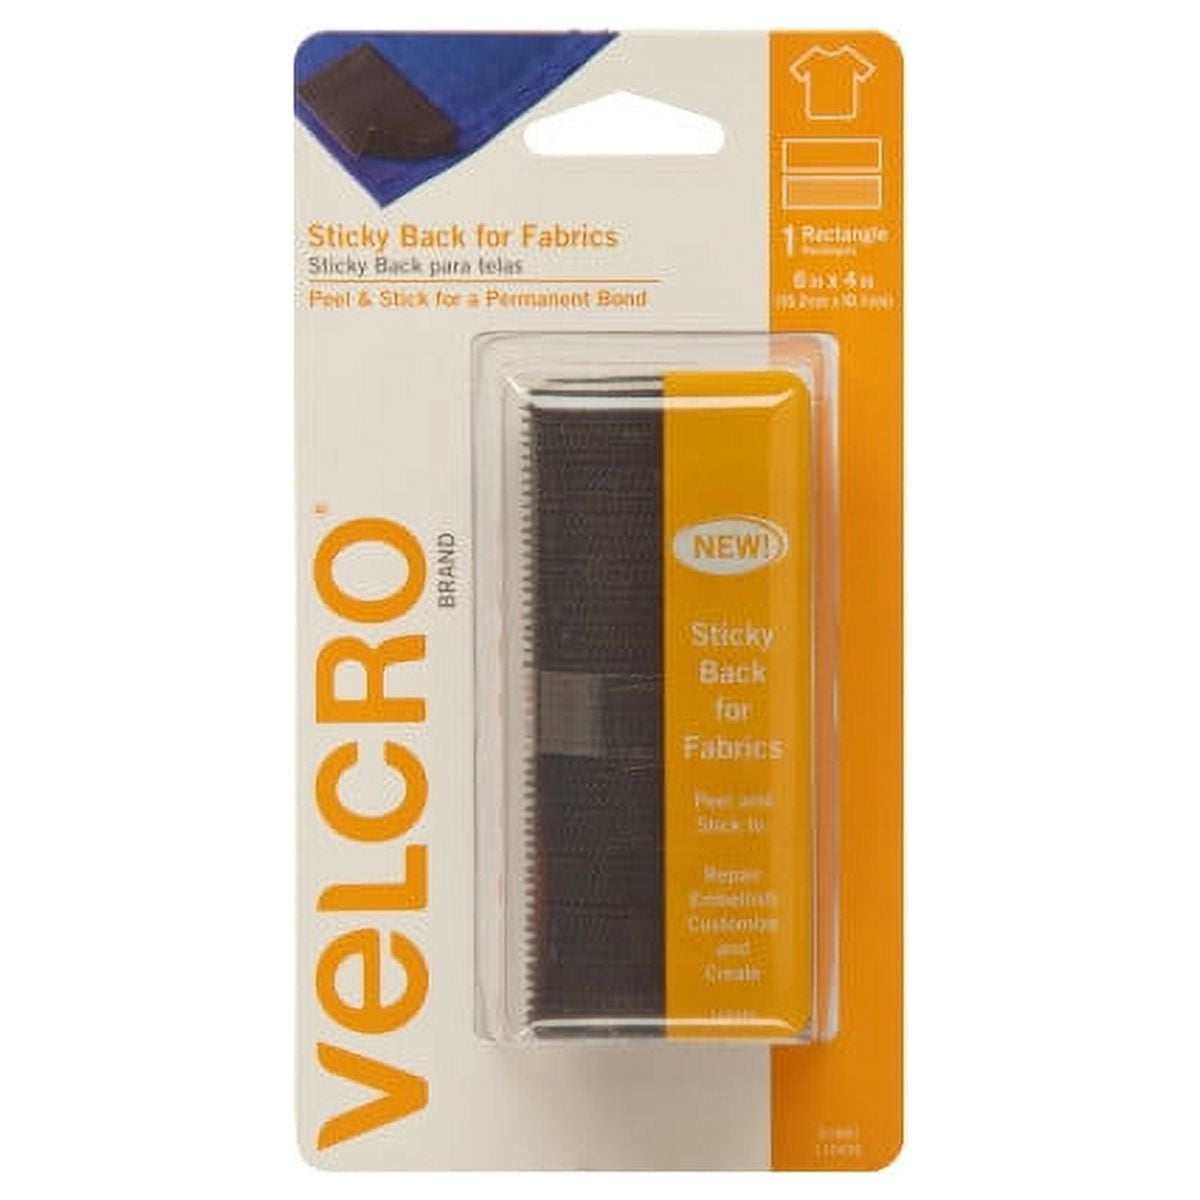 VELCRO® Sticky Back Fasteners - 16.67 yd Length x 0.75 Width - 1 / Roll -  Black